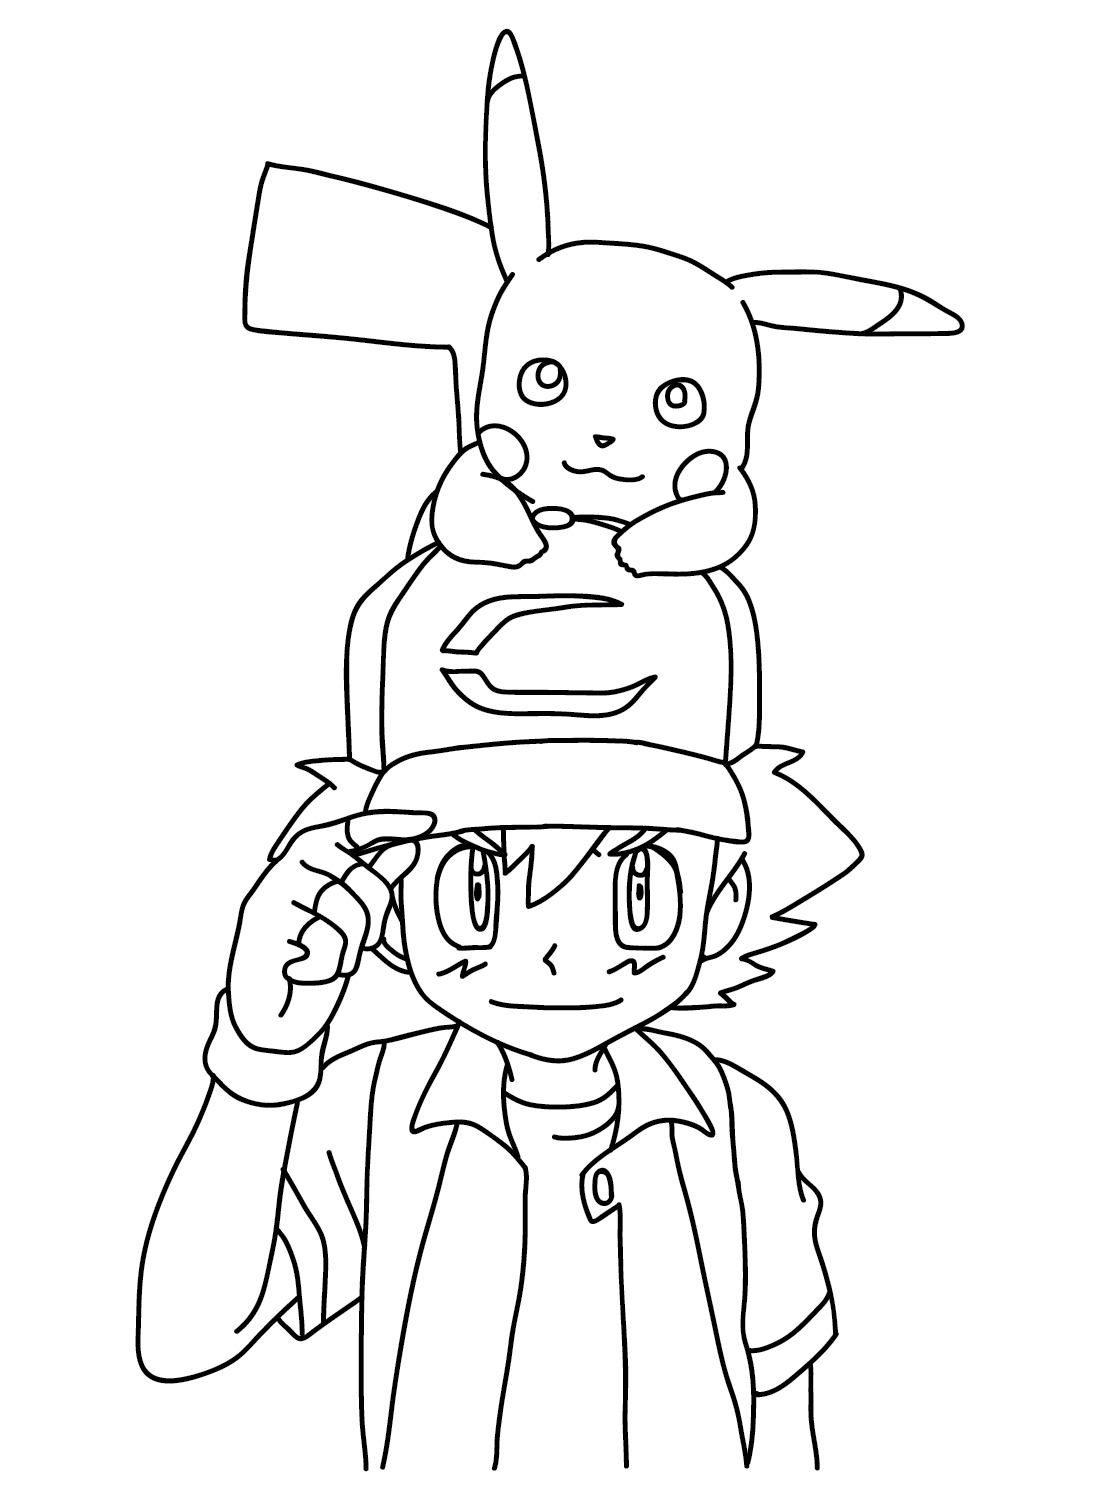 Ash Ketchum und Pikachu Coloring von Ash Ketchum